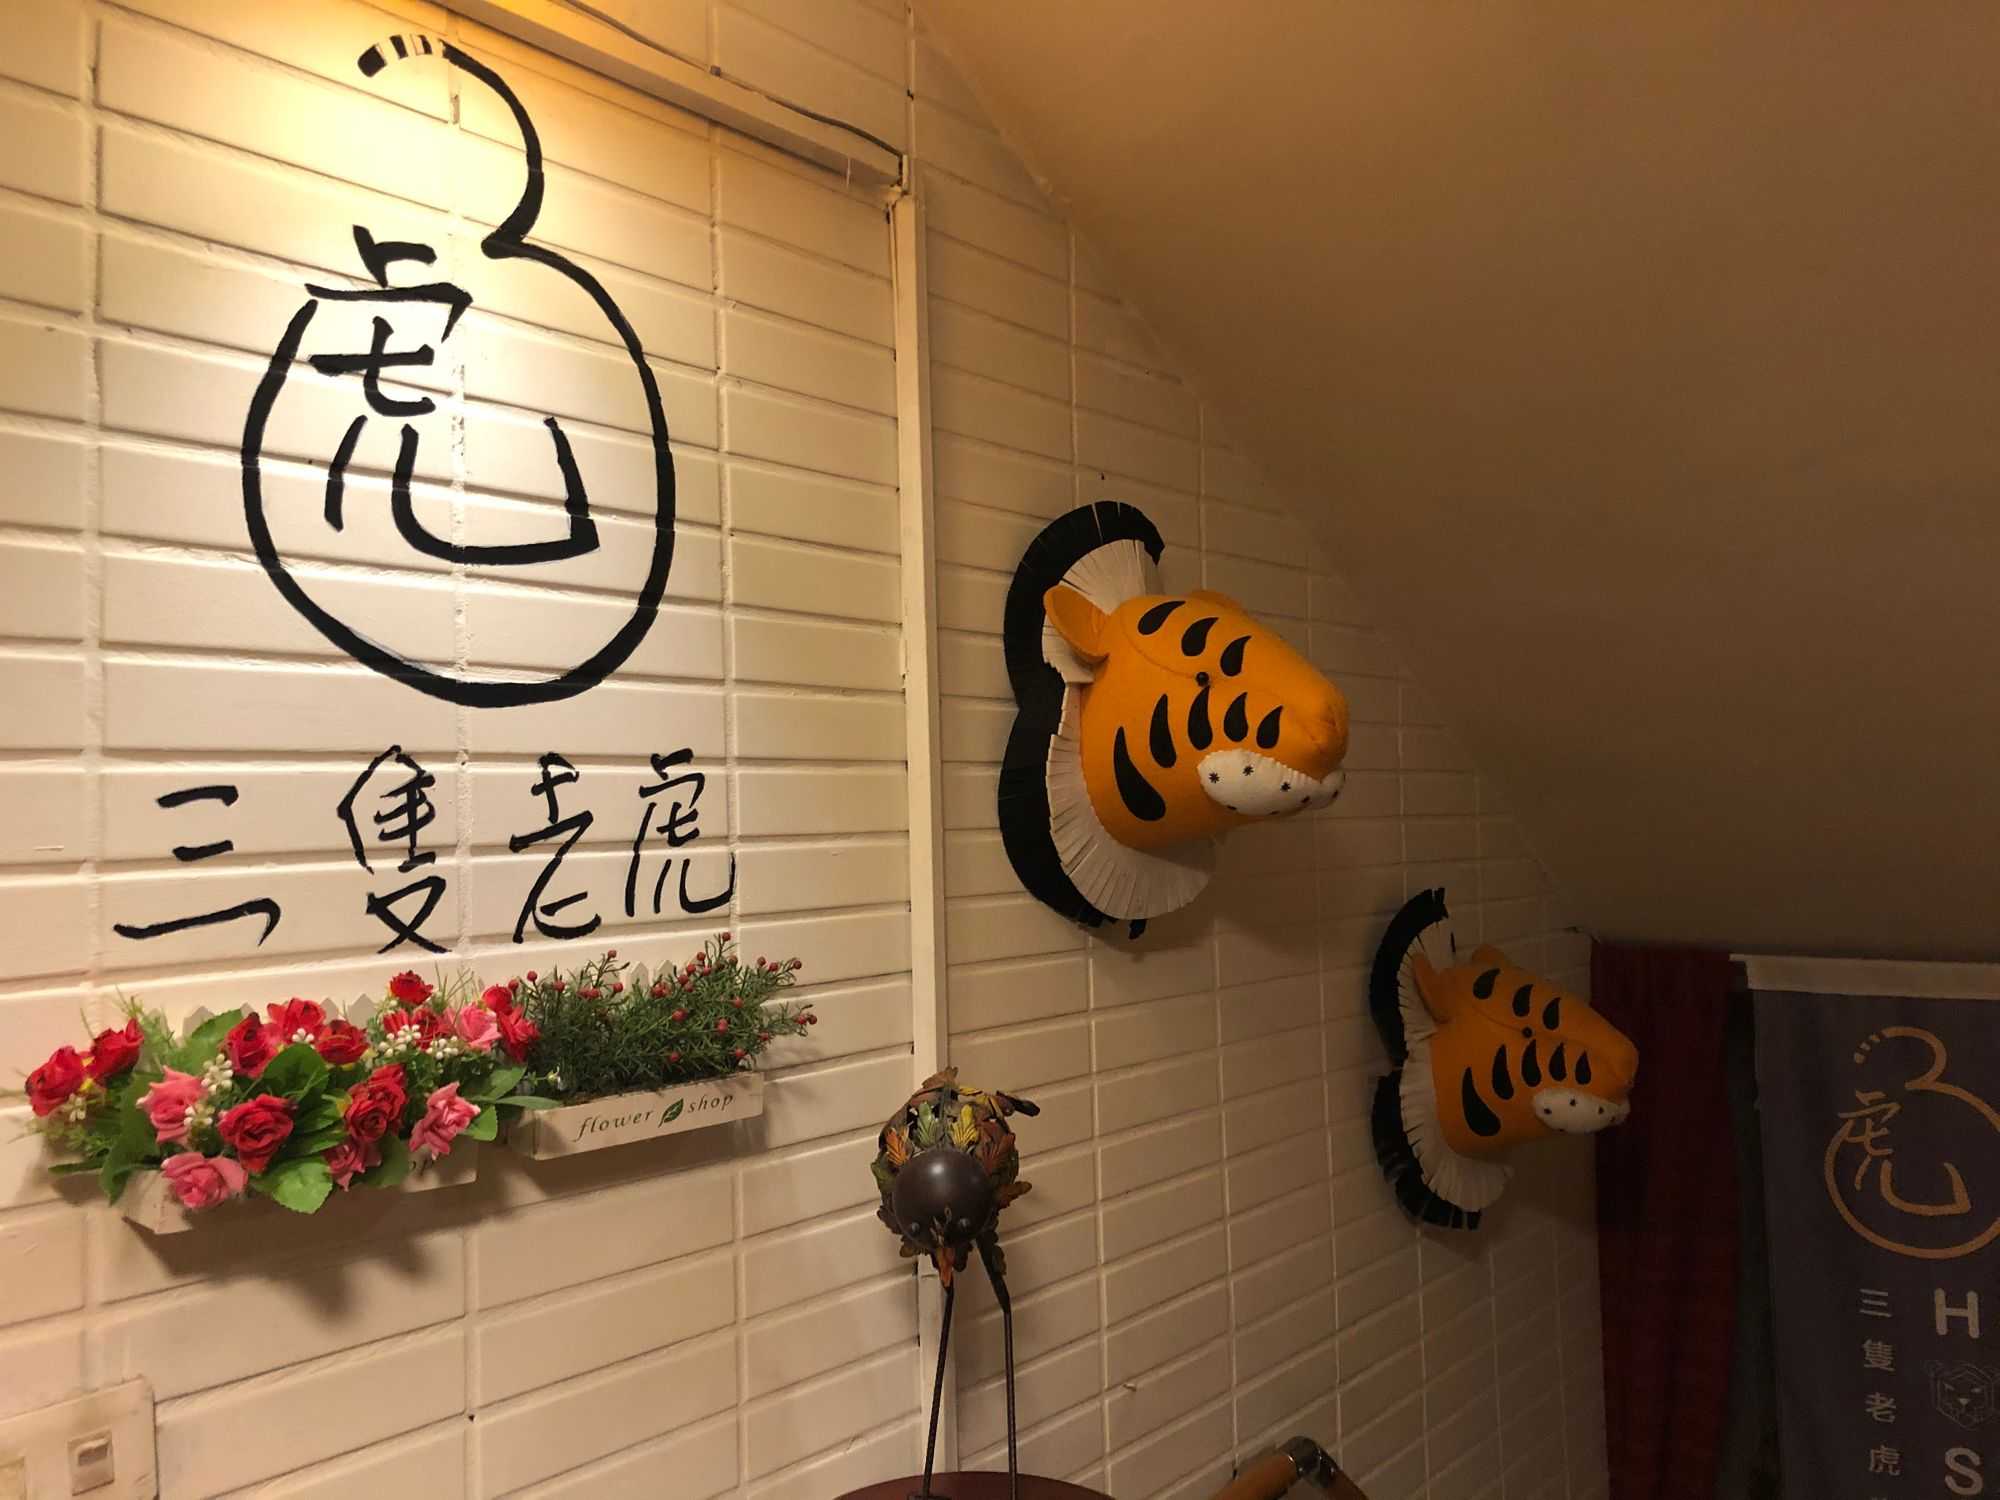 Taipei Triple Tiger Inn (Image by author)